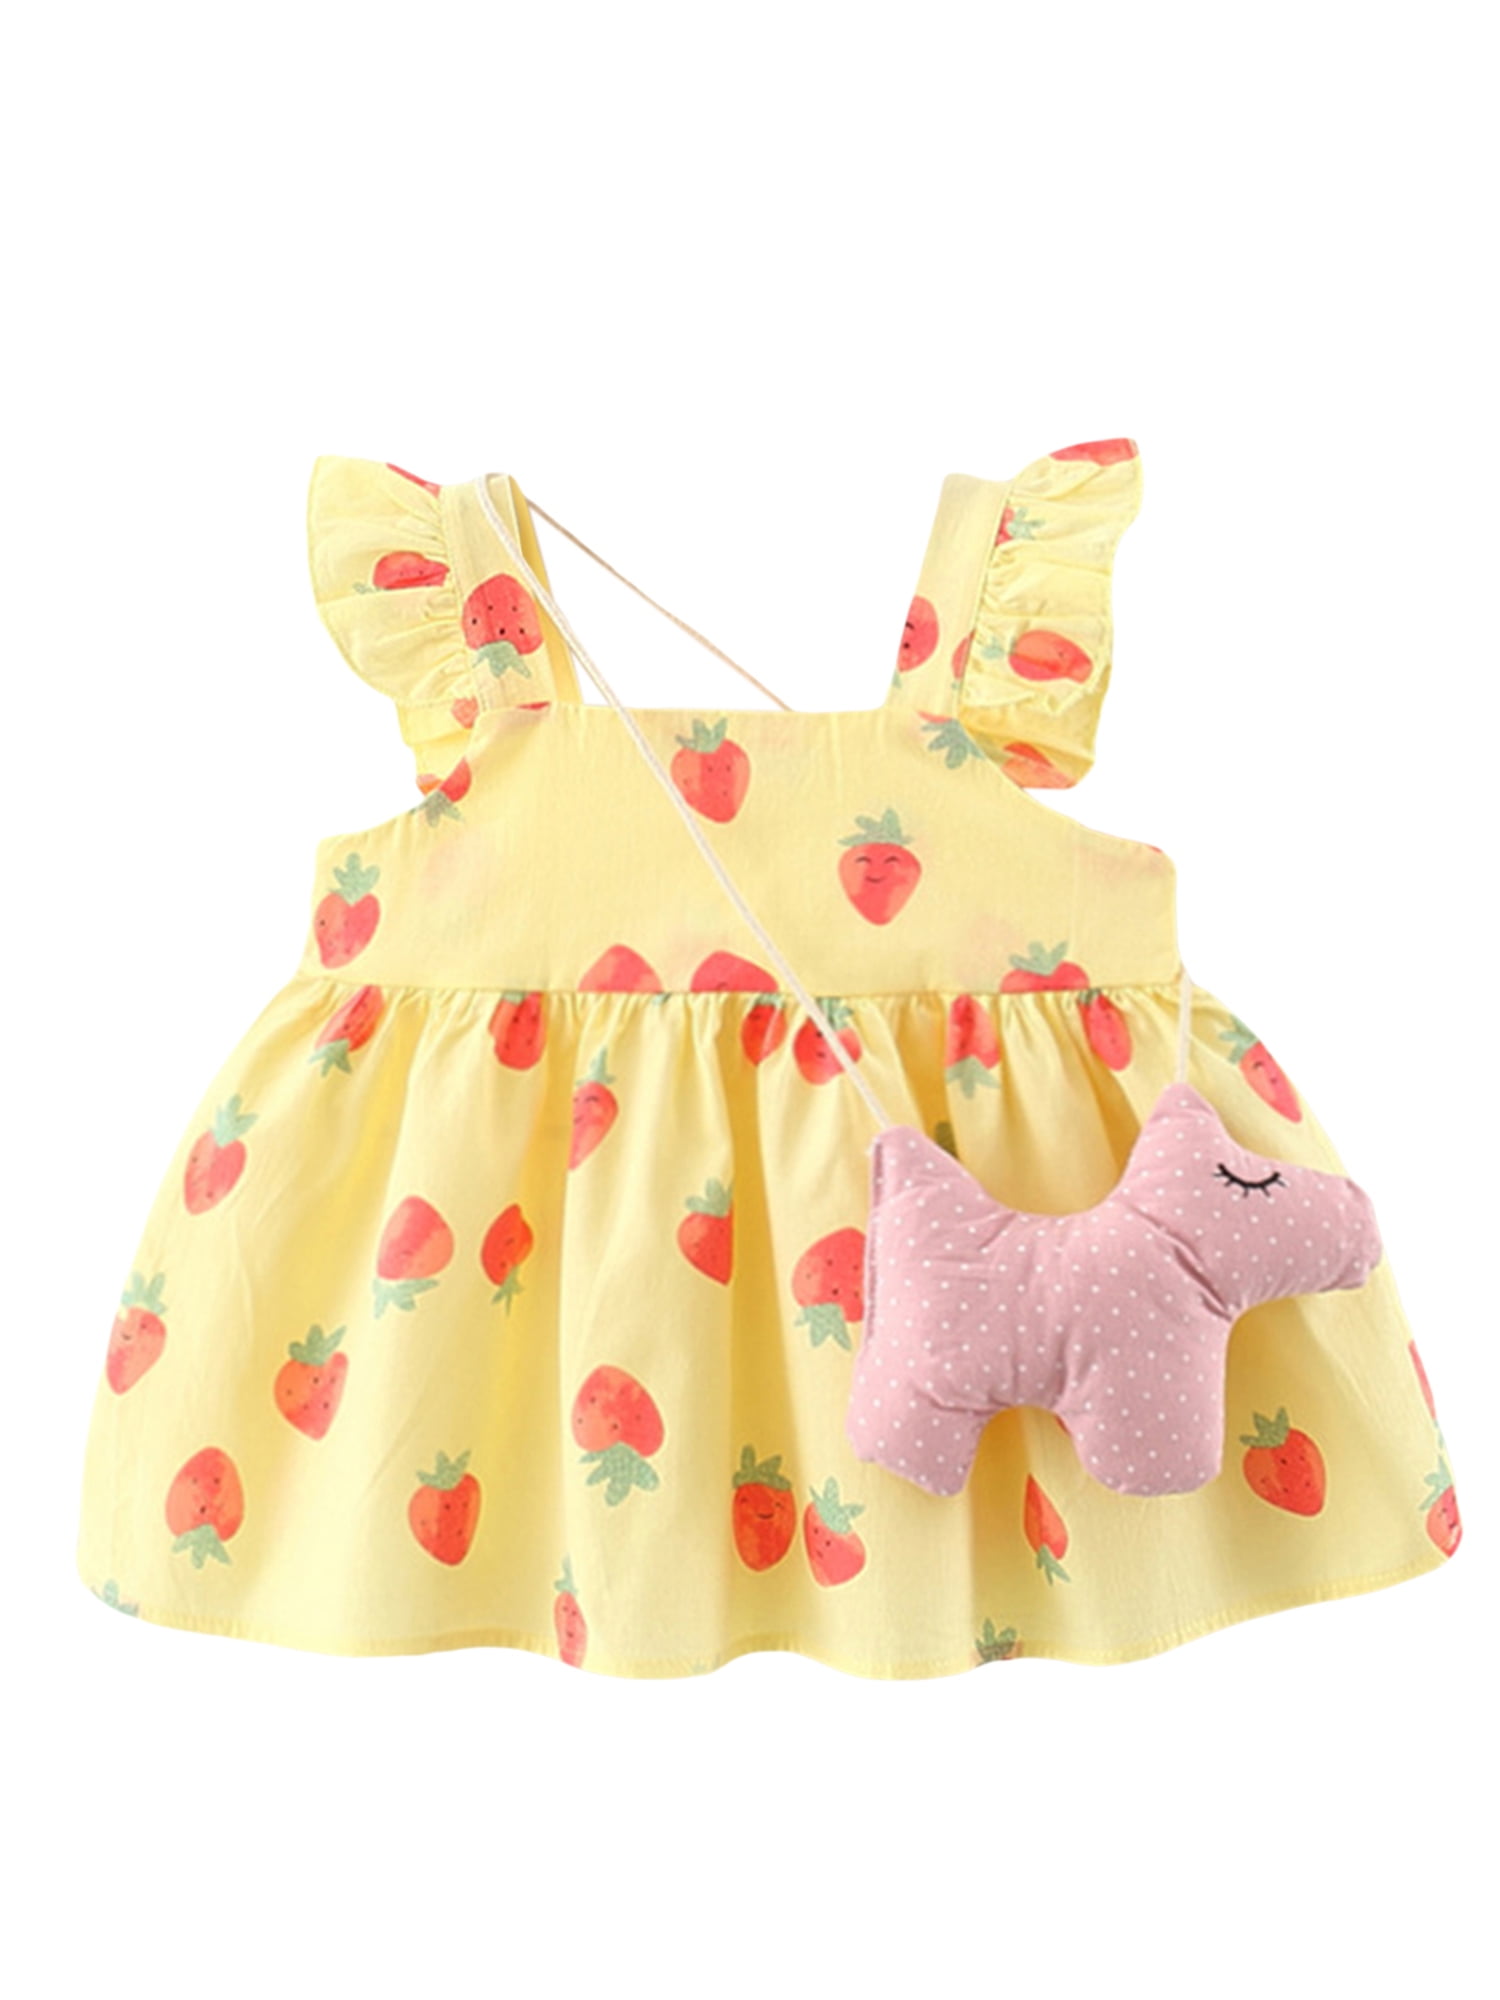 Genuiskids Infant Baby Girls Summer Dress Casual Strawberry Print ...